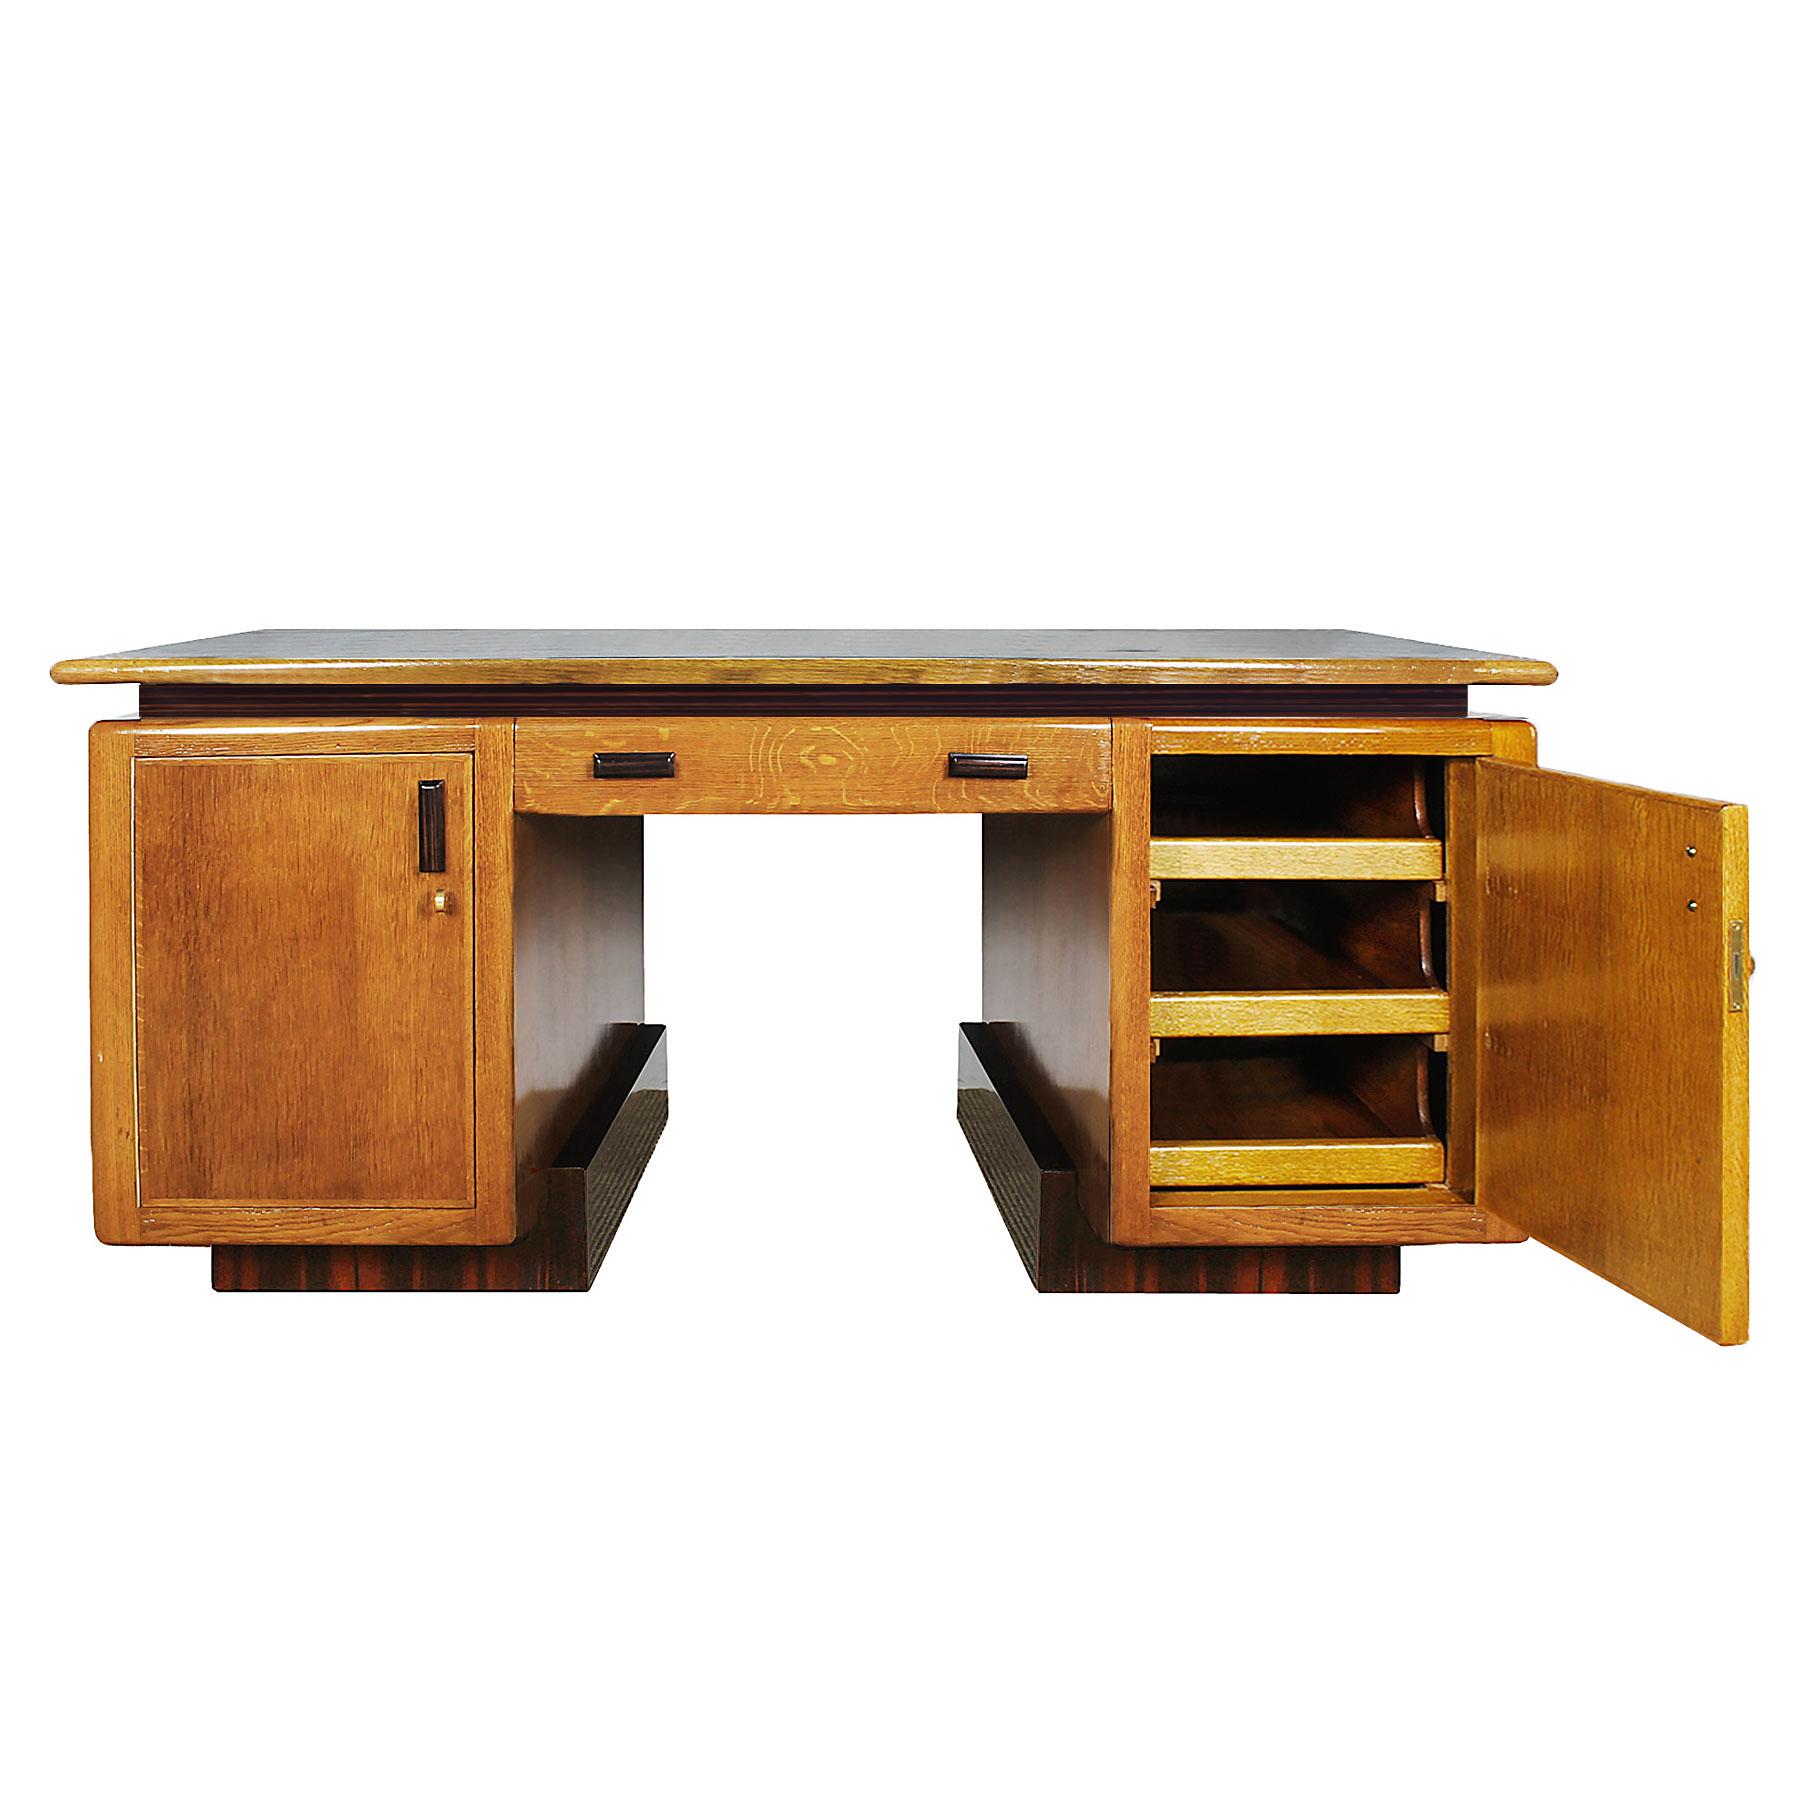 Dutch 1920s Amsterdam School Desk In Oakwood, Macassar Ebony and Leather - Netherlands For Sale